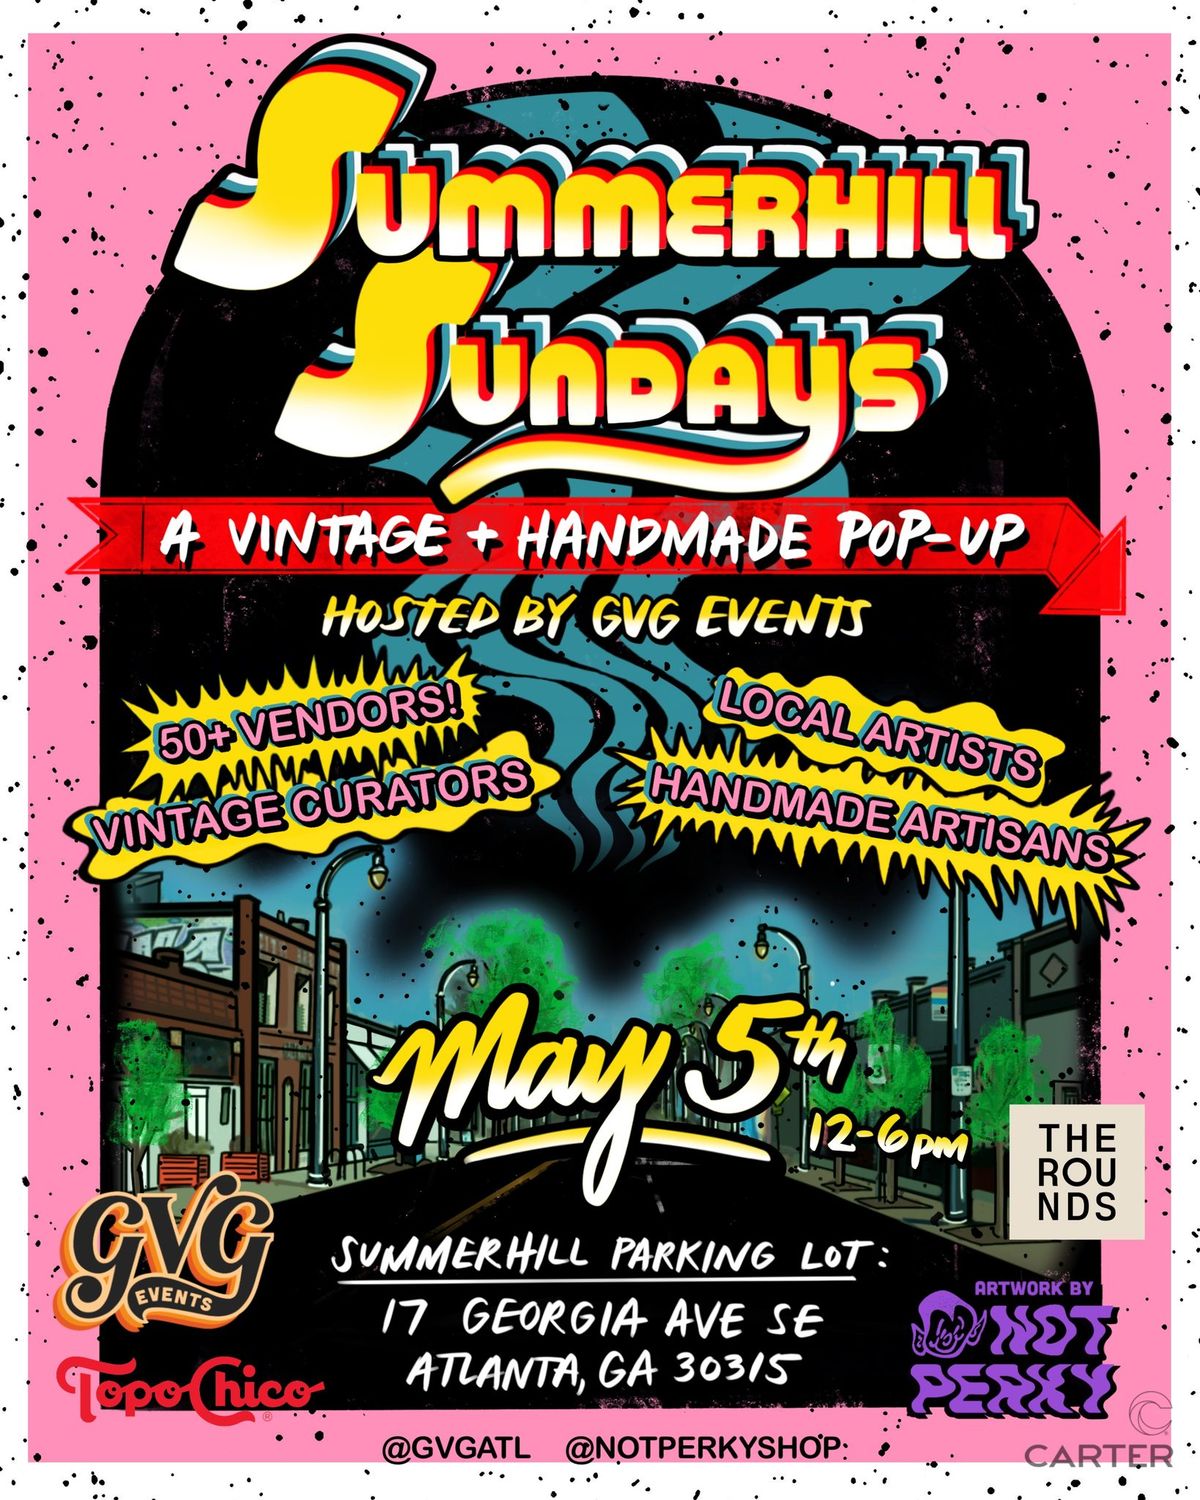 Summerhill Sundays- A Vintage and Handmade Pop Up 